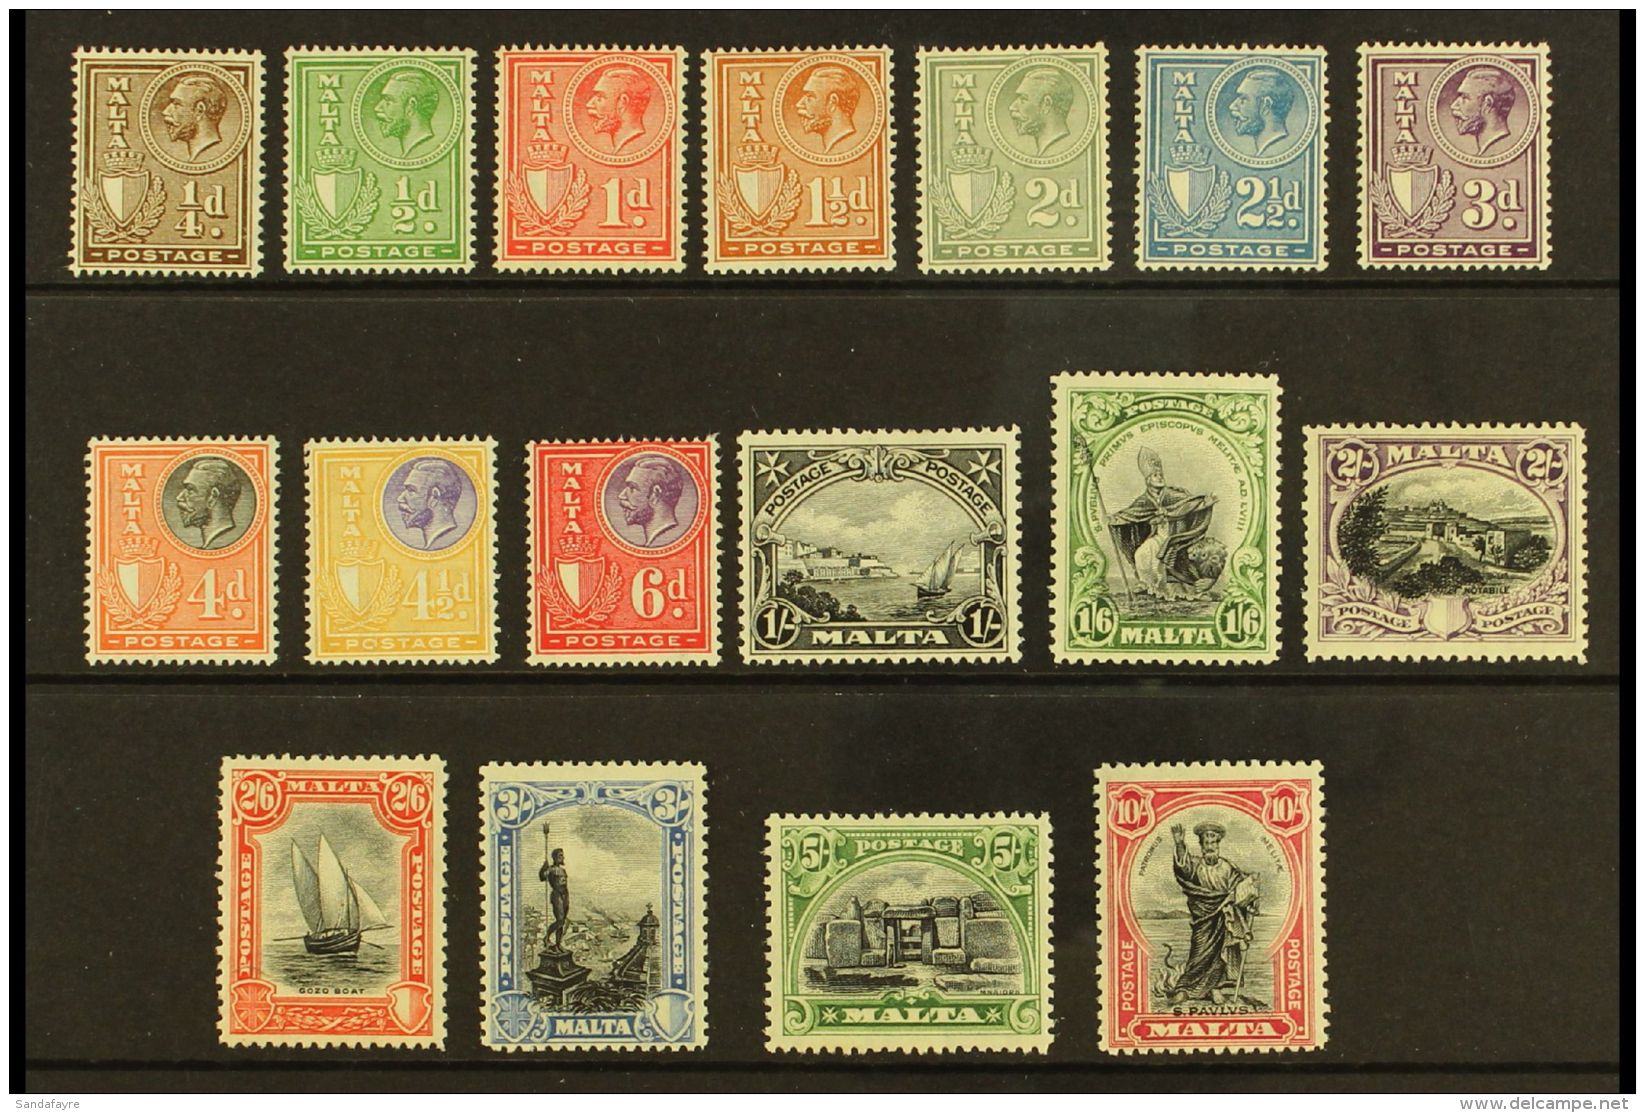 1926-27 Inscribed "Postage" Complete Definitive Set, SG 157/172, Fine Mint. (17 Stamps) For More Images, Please... - Malta (...-1964)